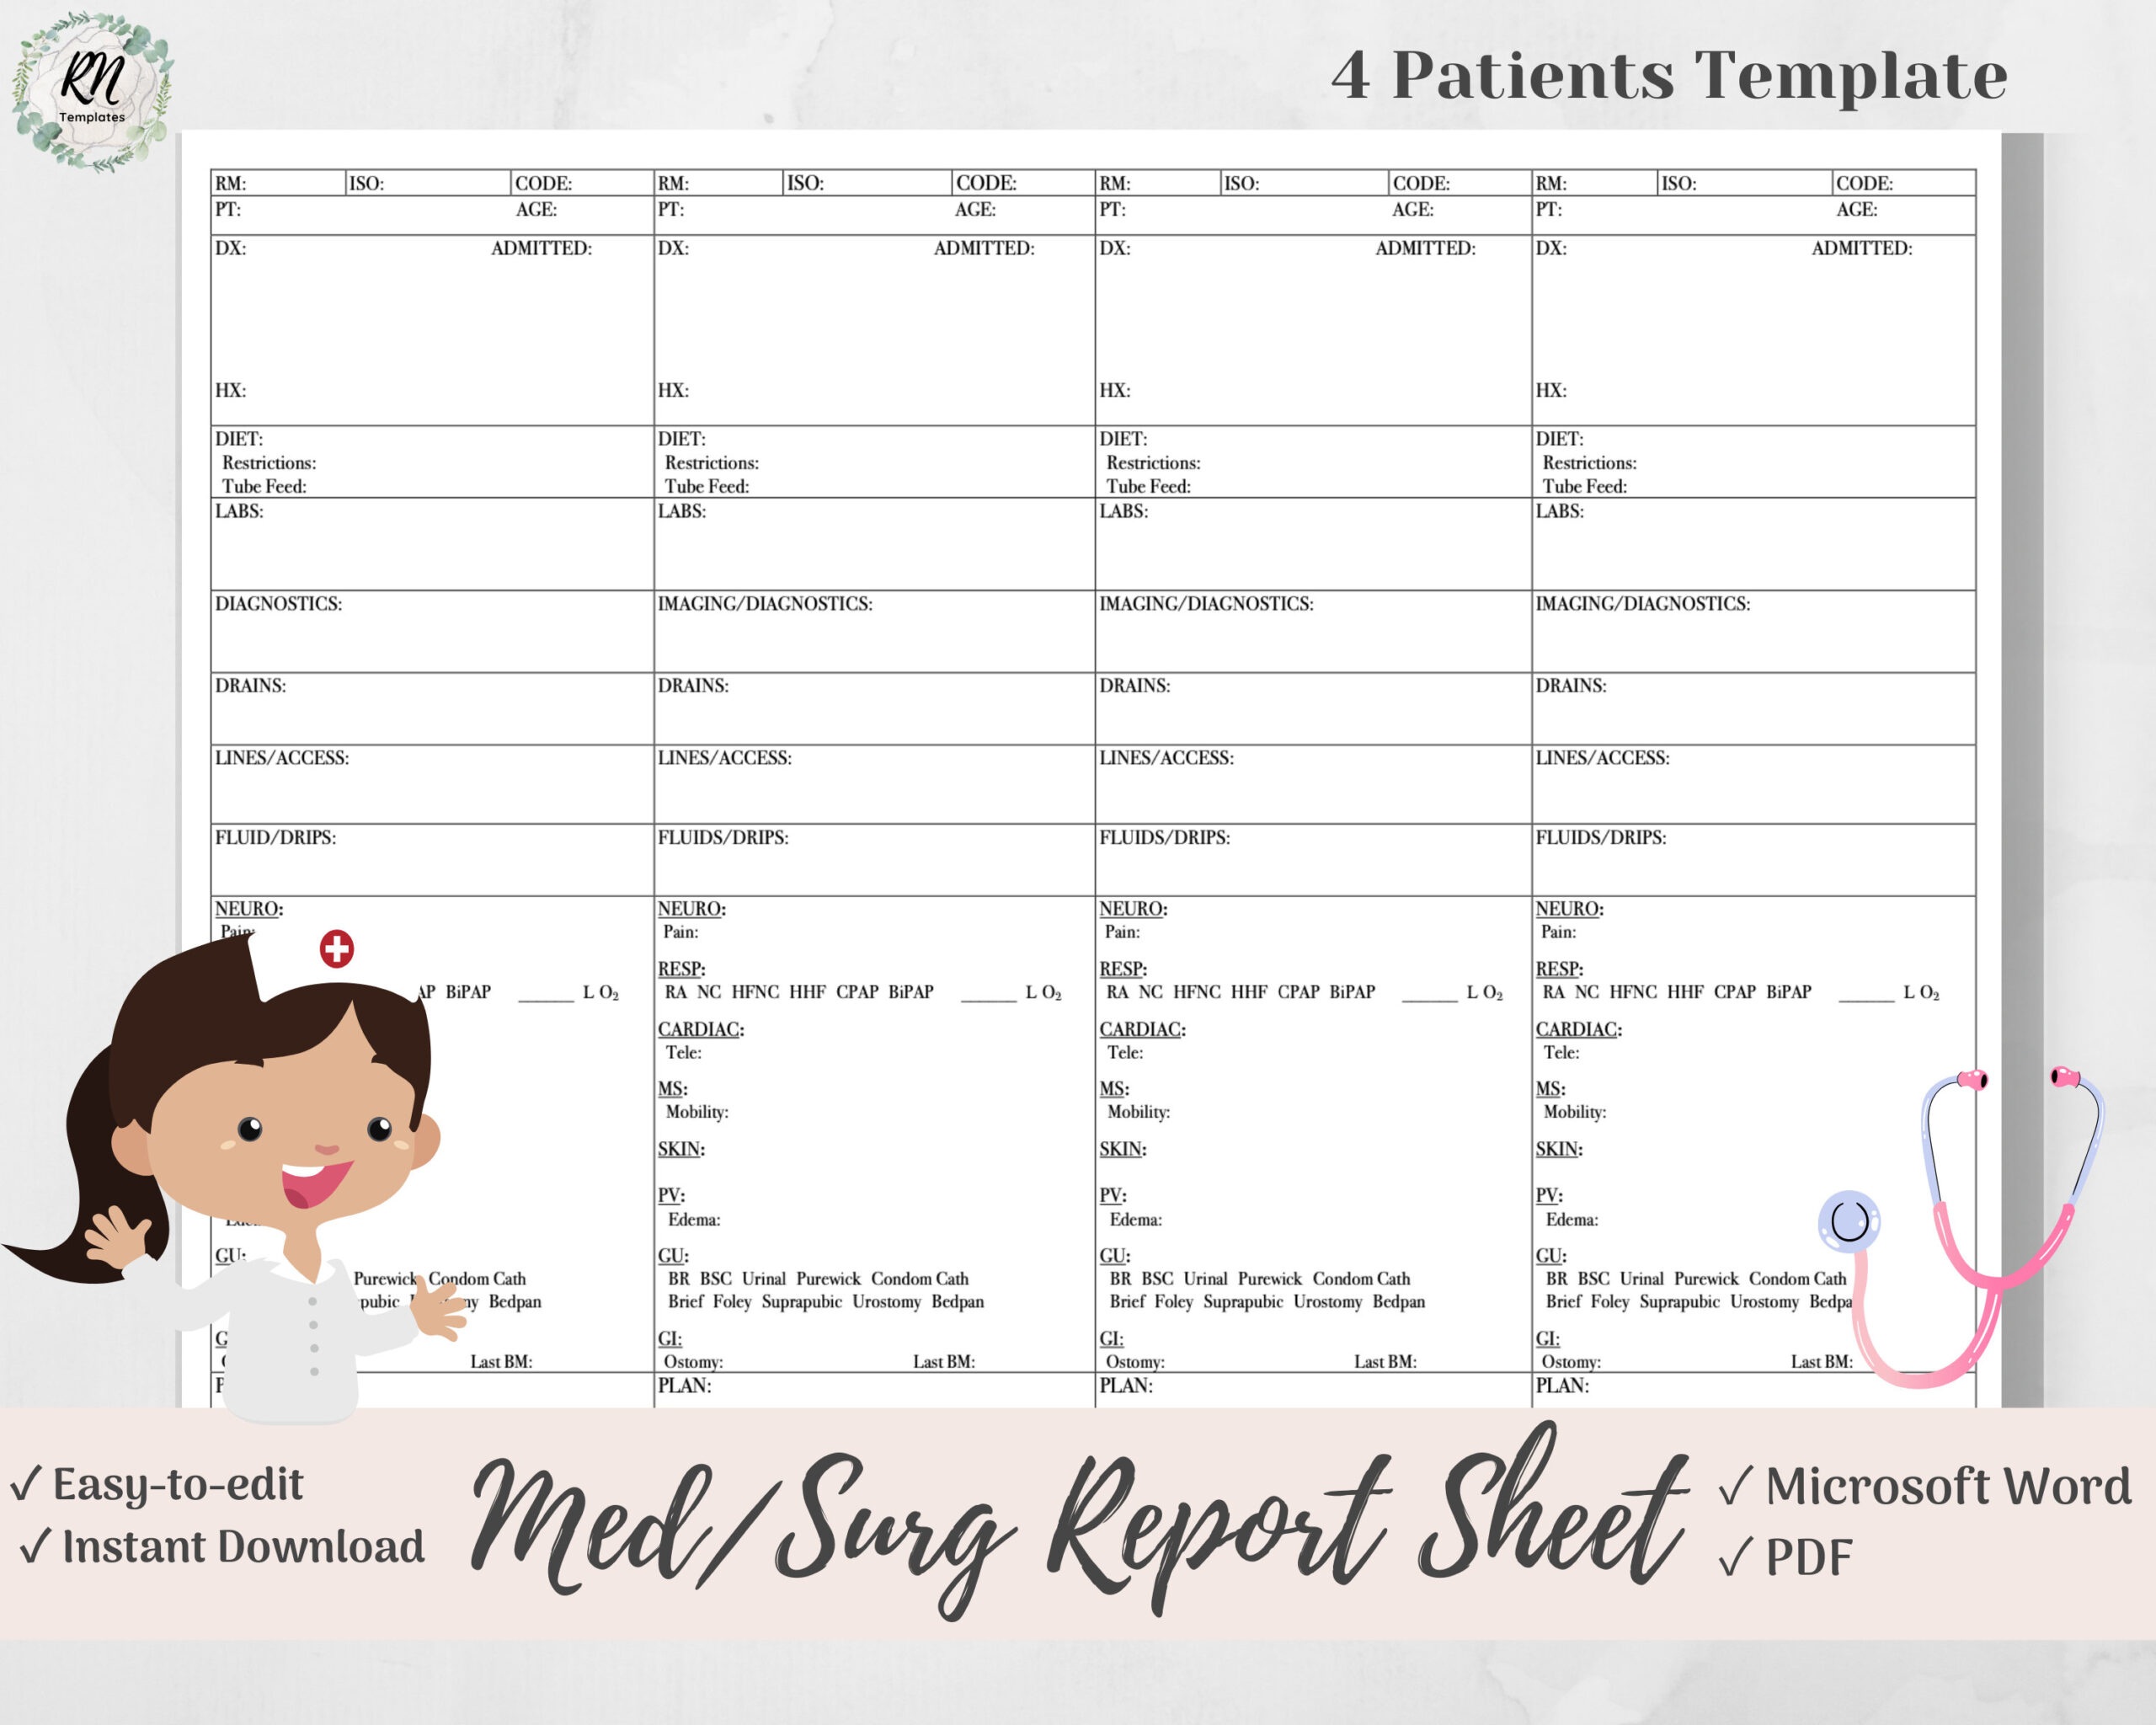 The BEST Med/surg Nurse Brain Report Sheet for 10 Patients - Etsy UK Inside Med Surg Report Sheet Templates